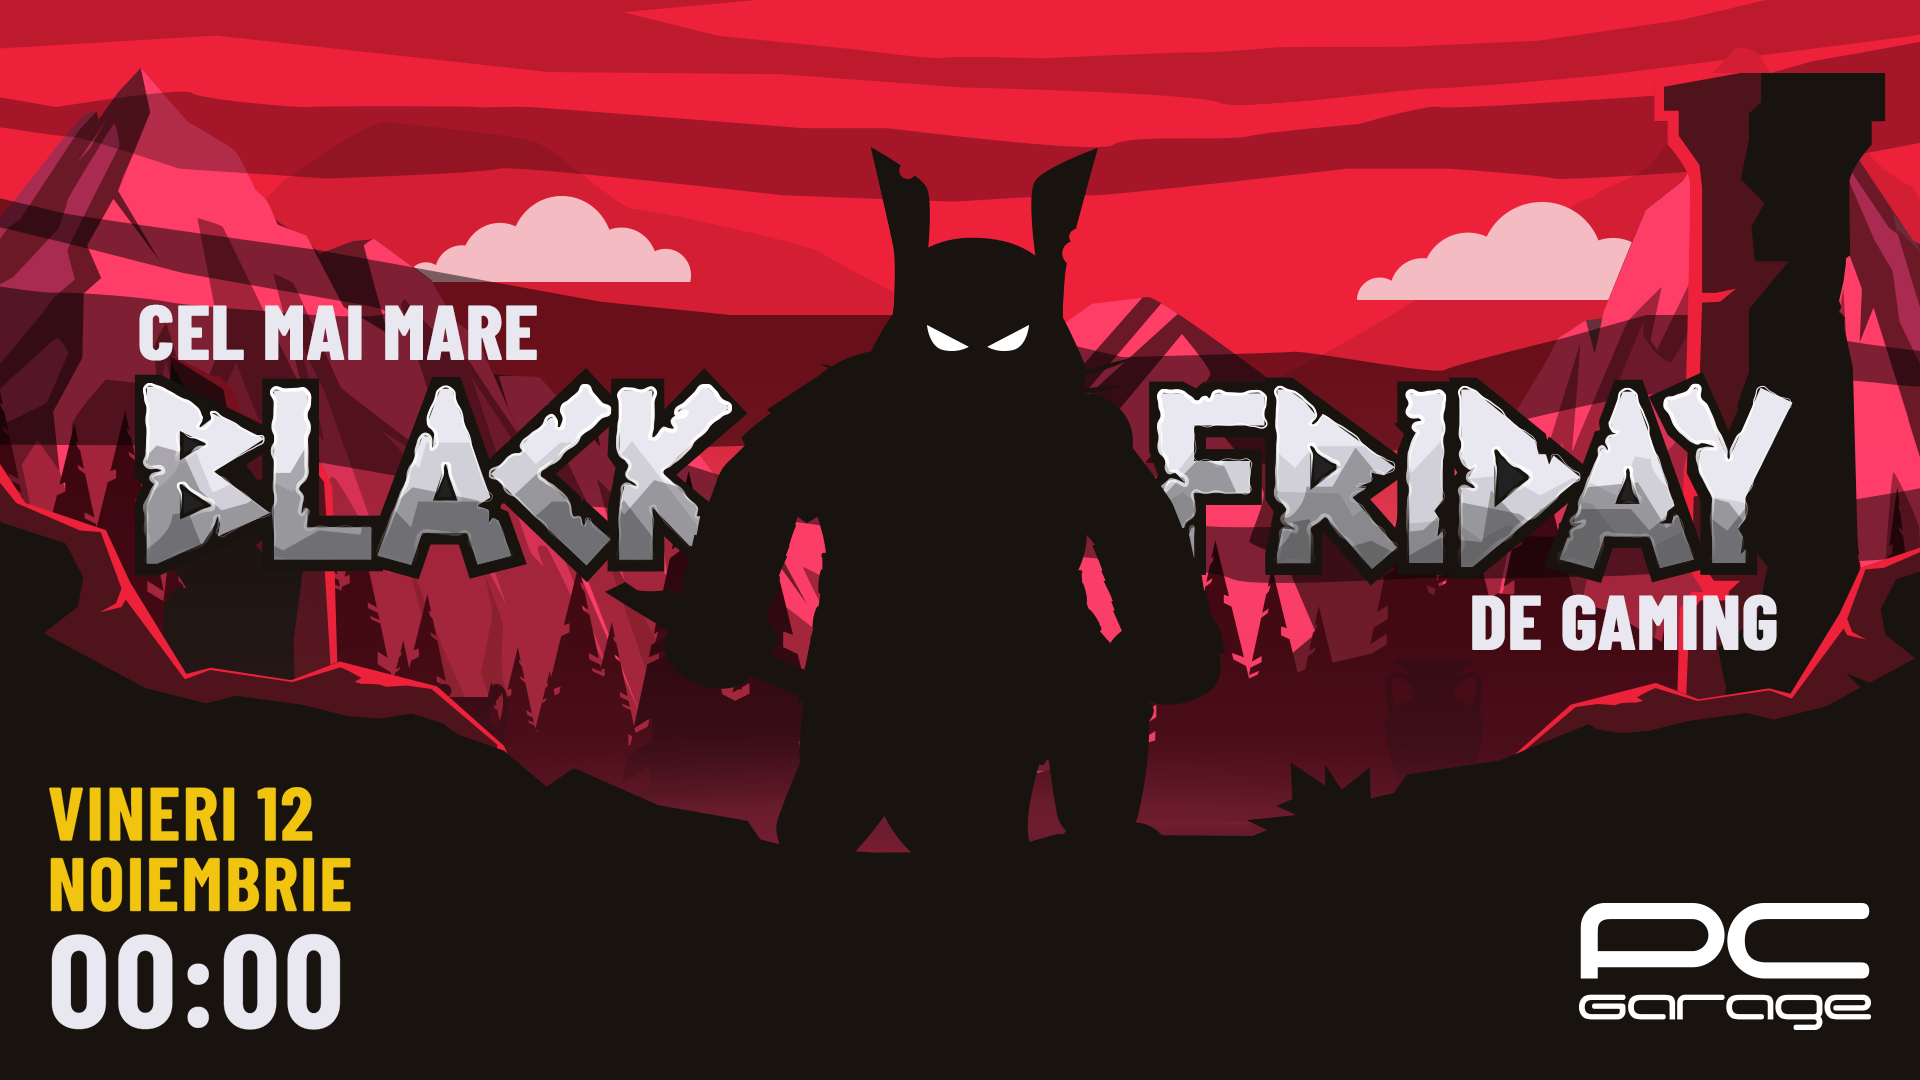 PC Garage anunţă Black Friday de Gaming